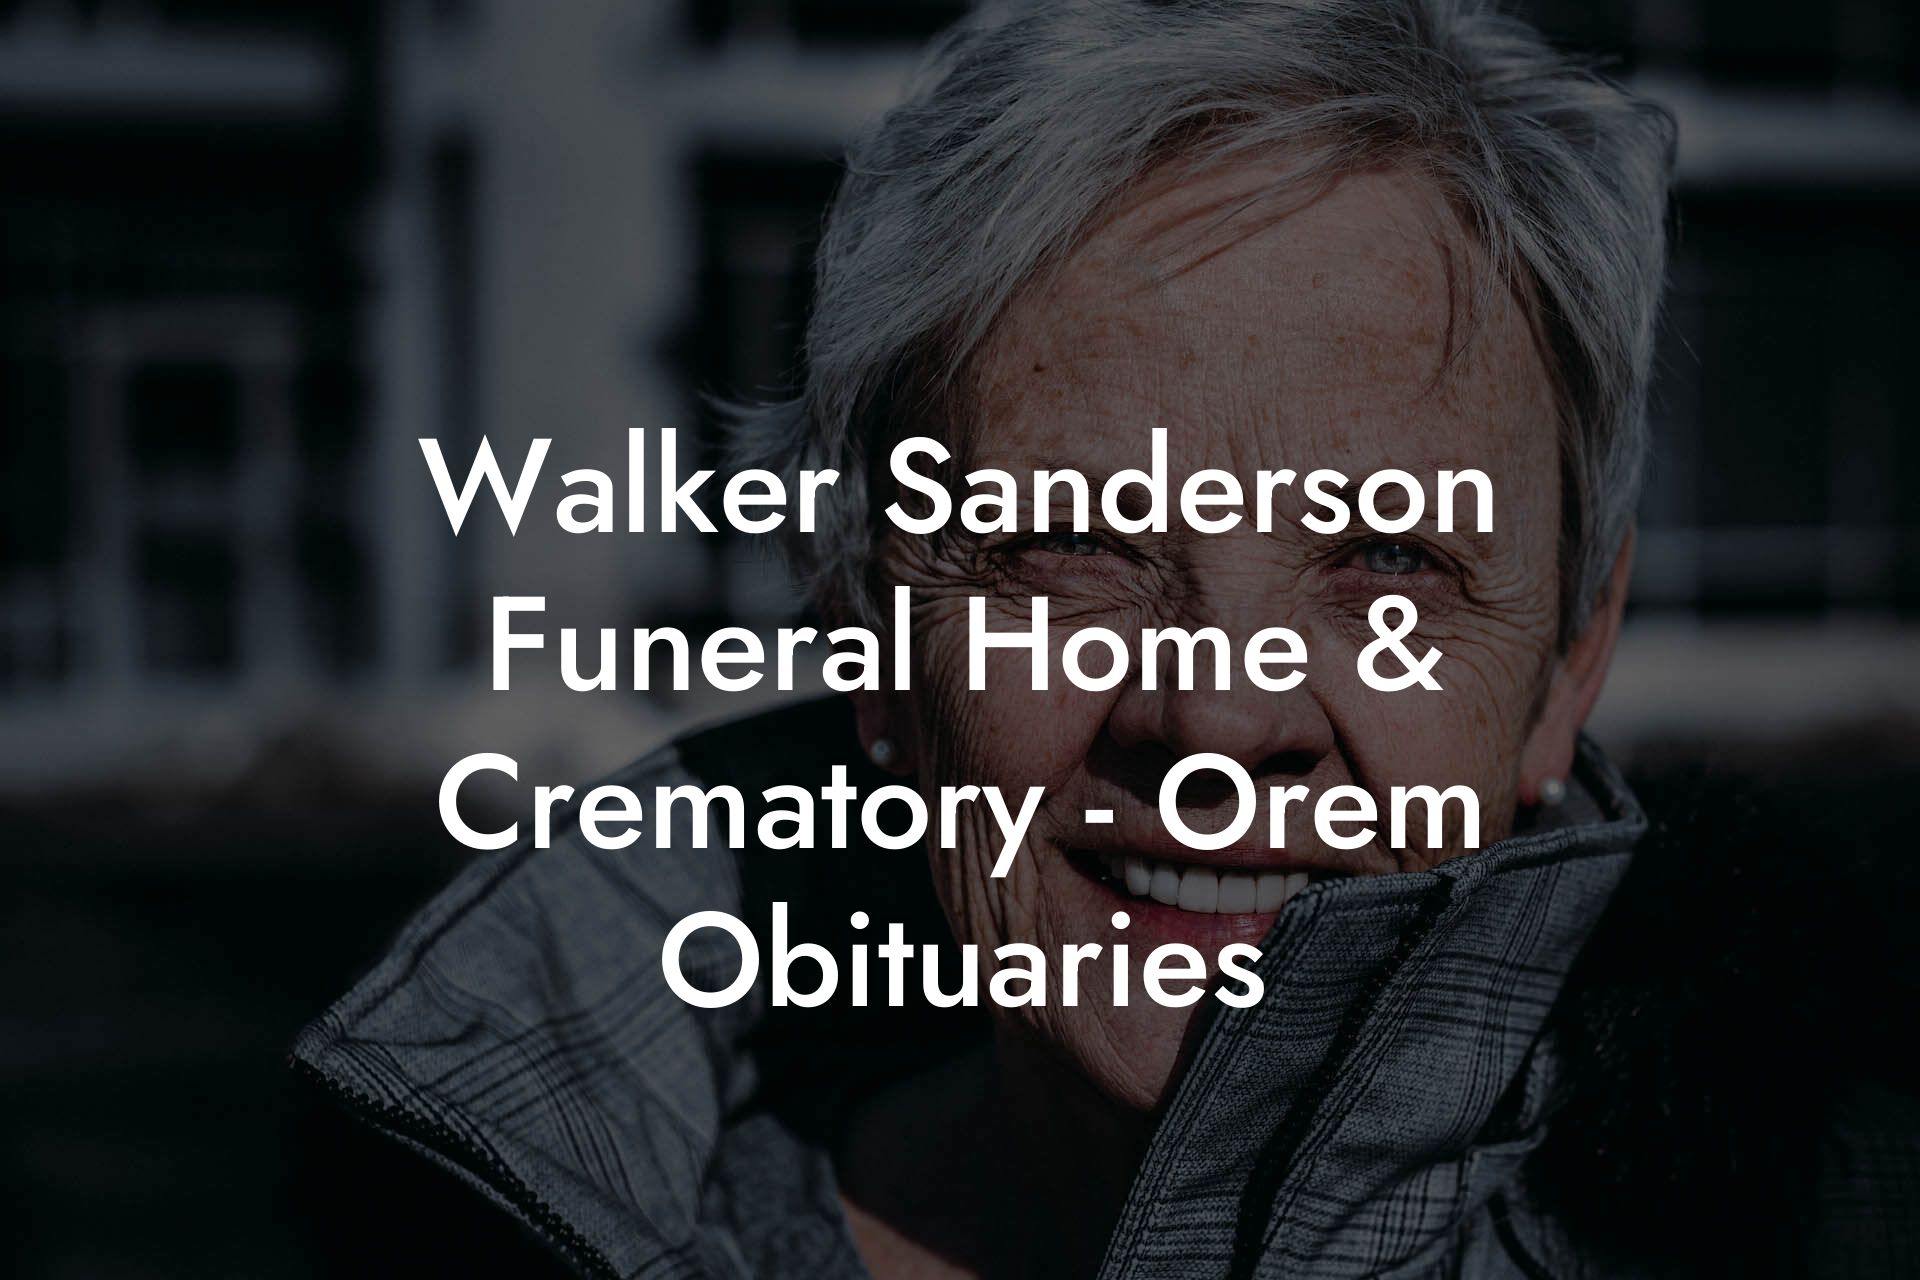 Walker Sanderson Funeral Home & Crematory - Orem Obituaries